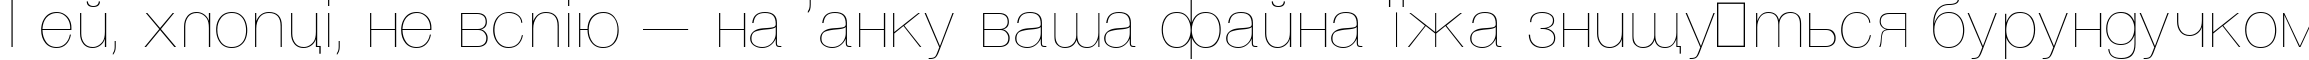 Пример написания шрифтом Vanta Thin Plain:001.001 текста на украинском